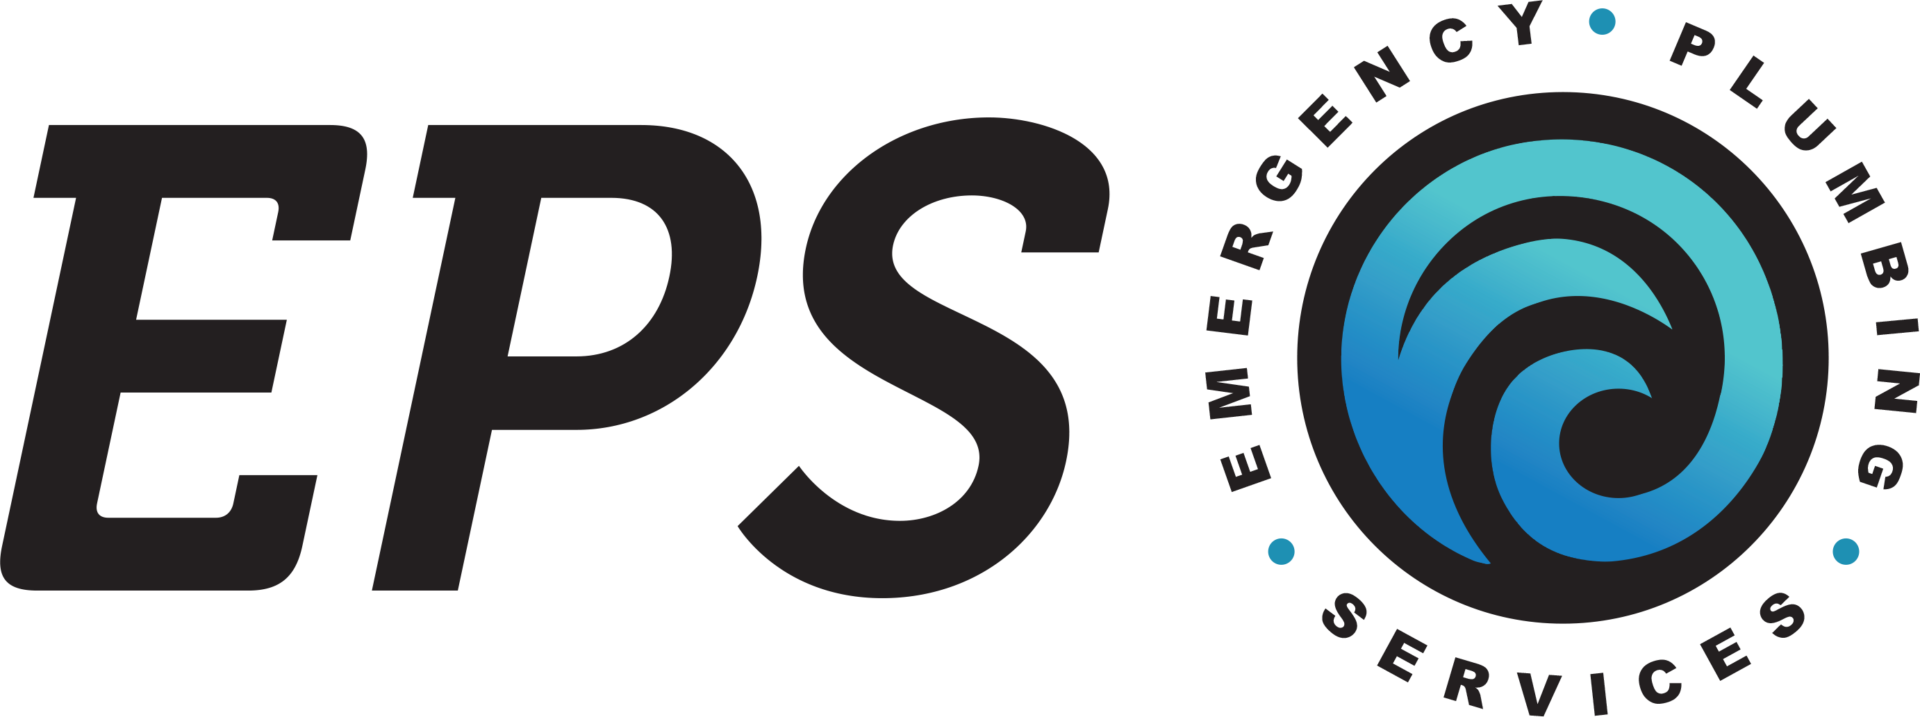 EPS-Logo